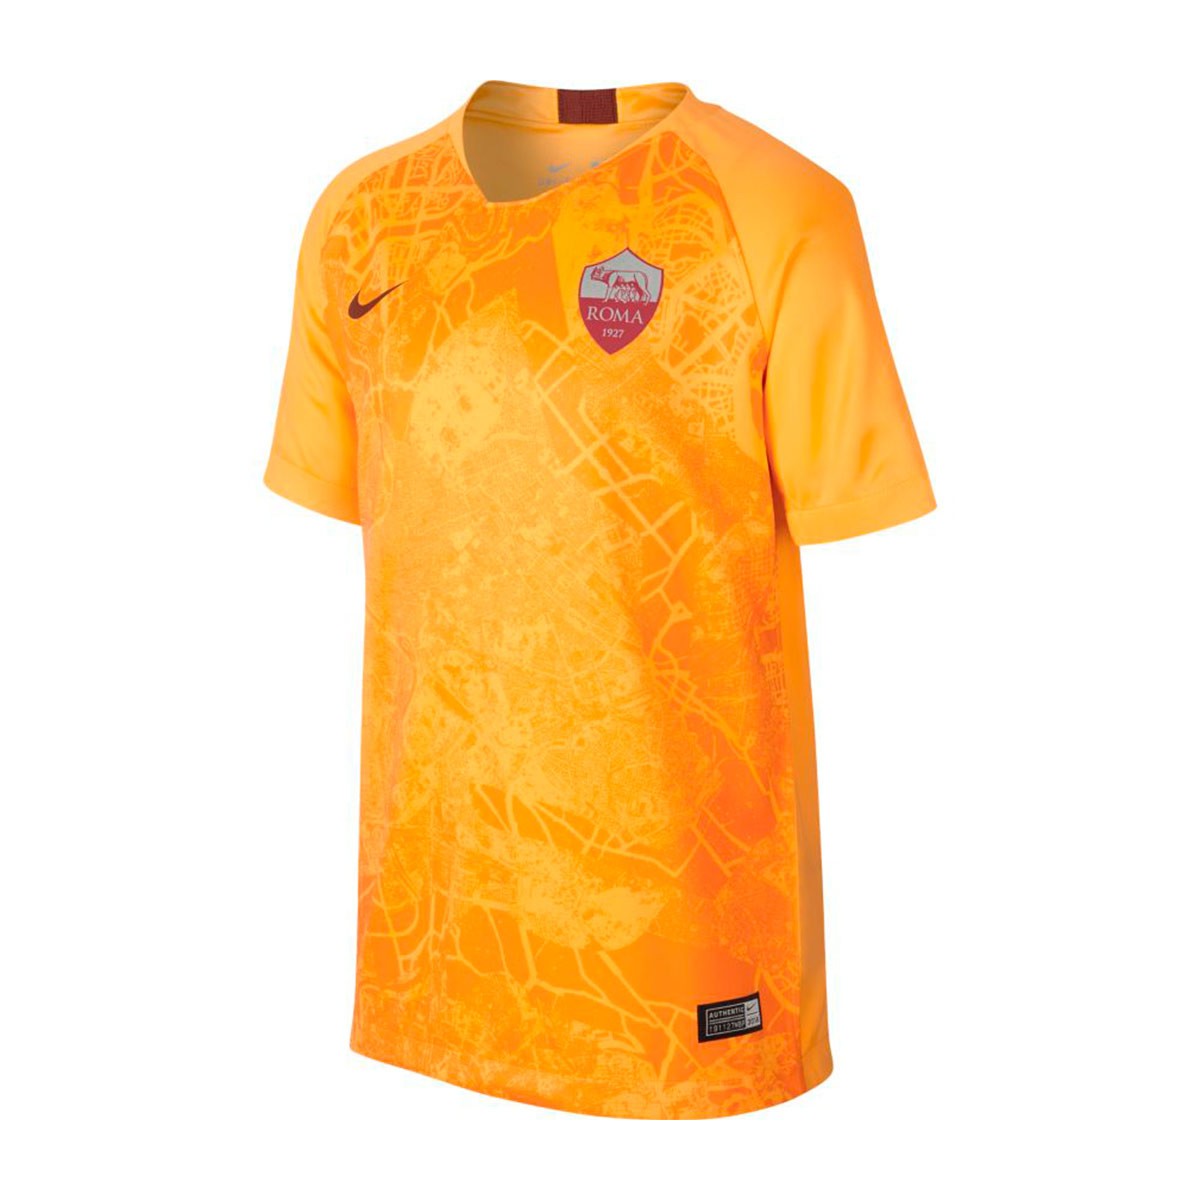 roma football club jersey